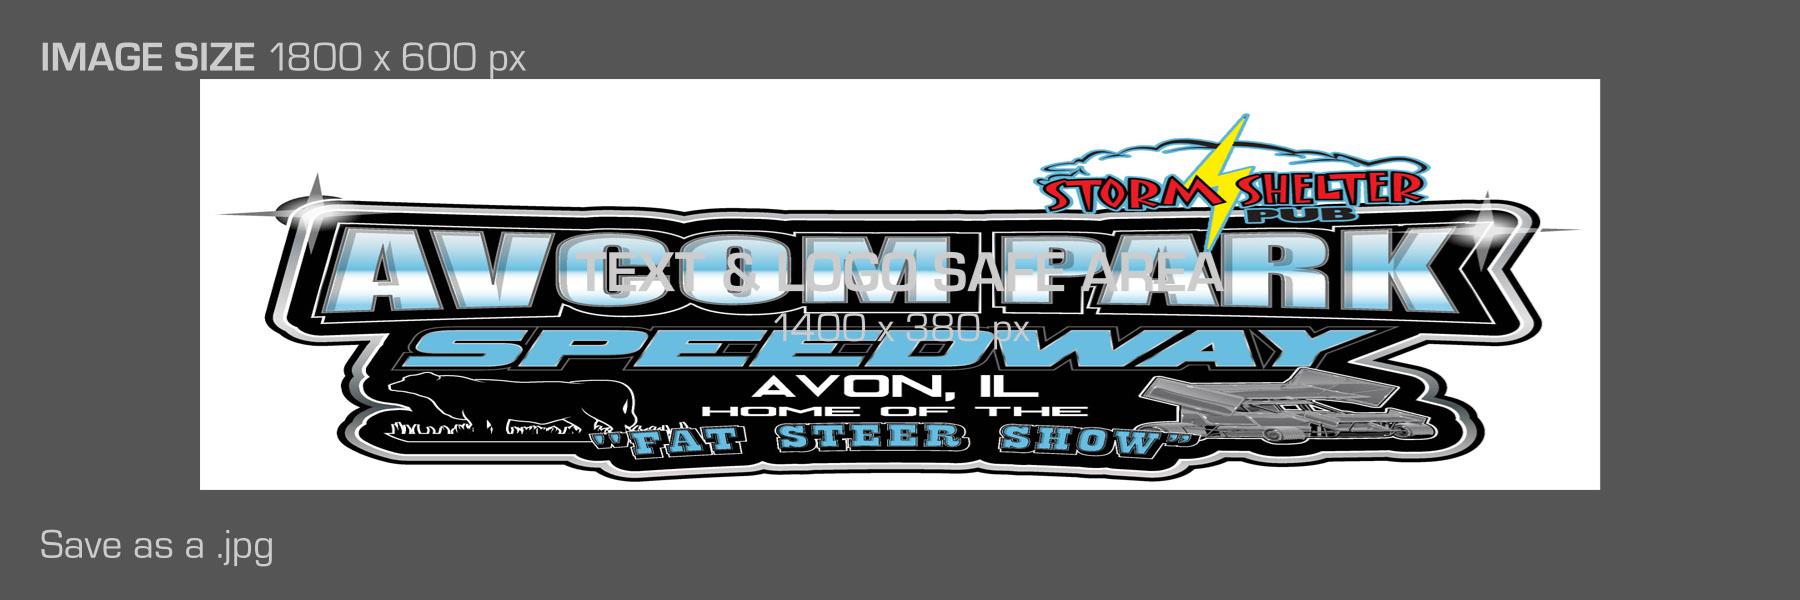 7/18/2021 - Avcom Park Speedway